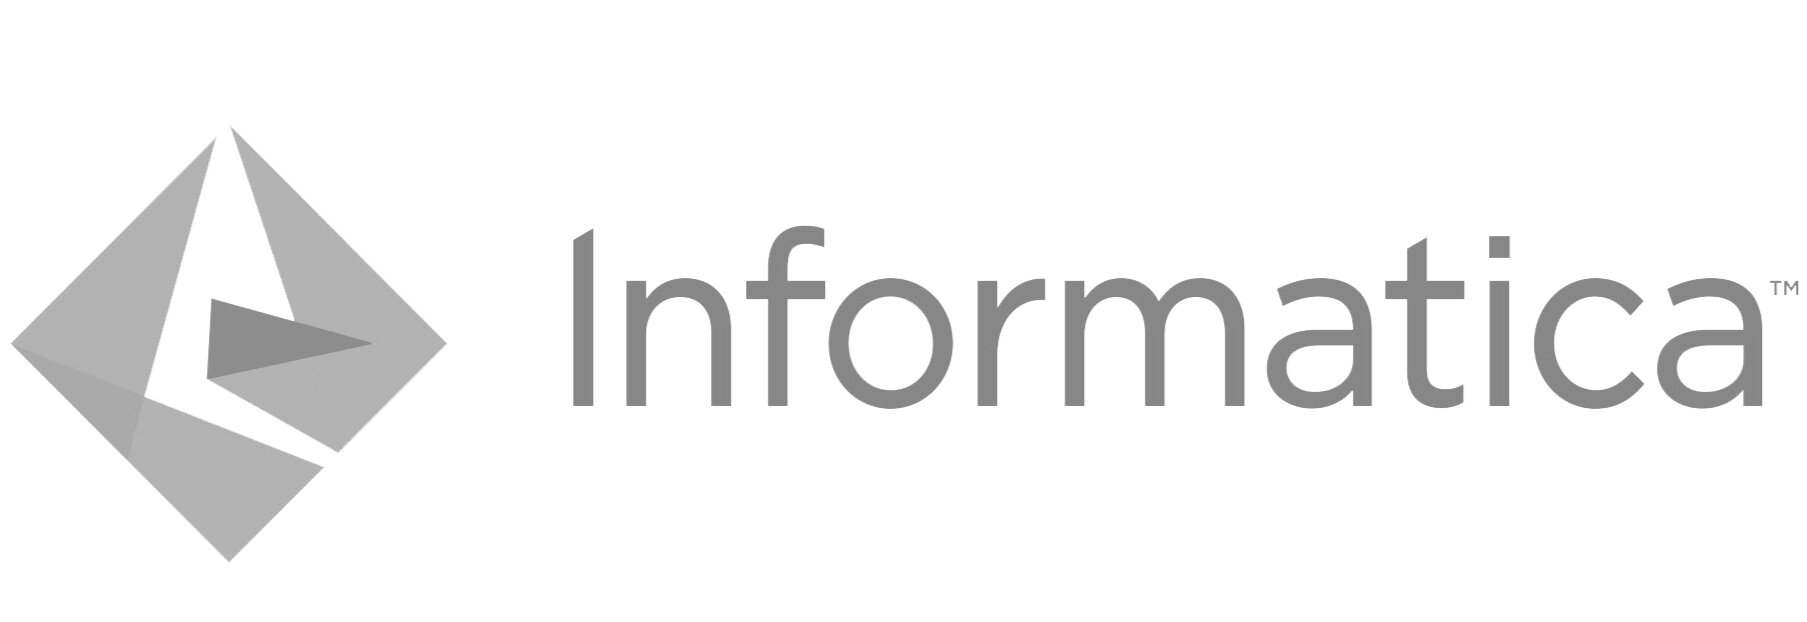 informatica-logo.jpg